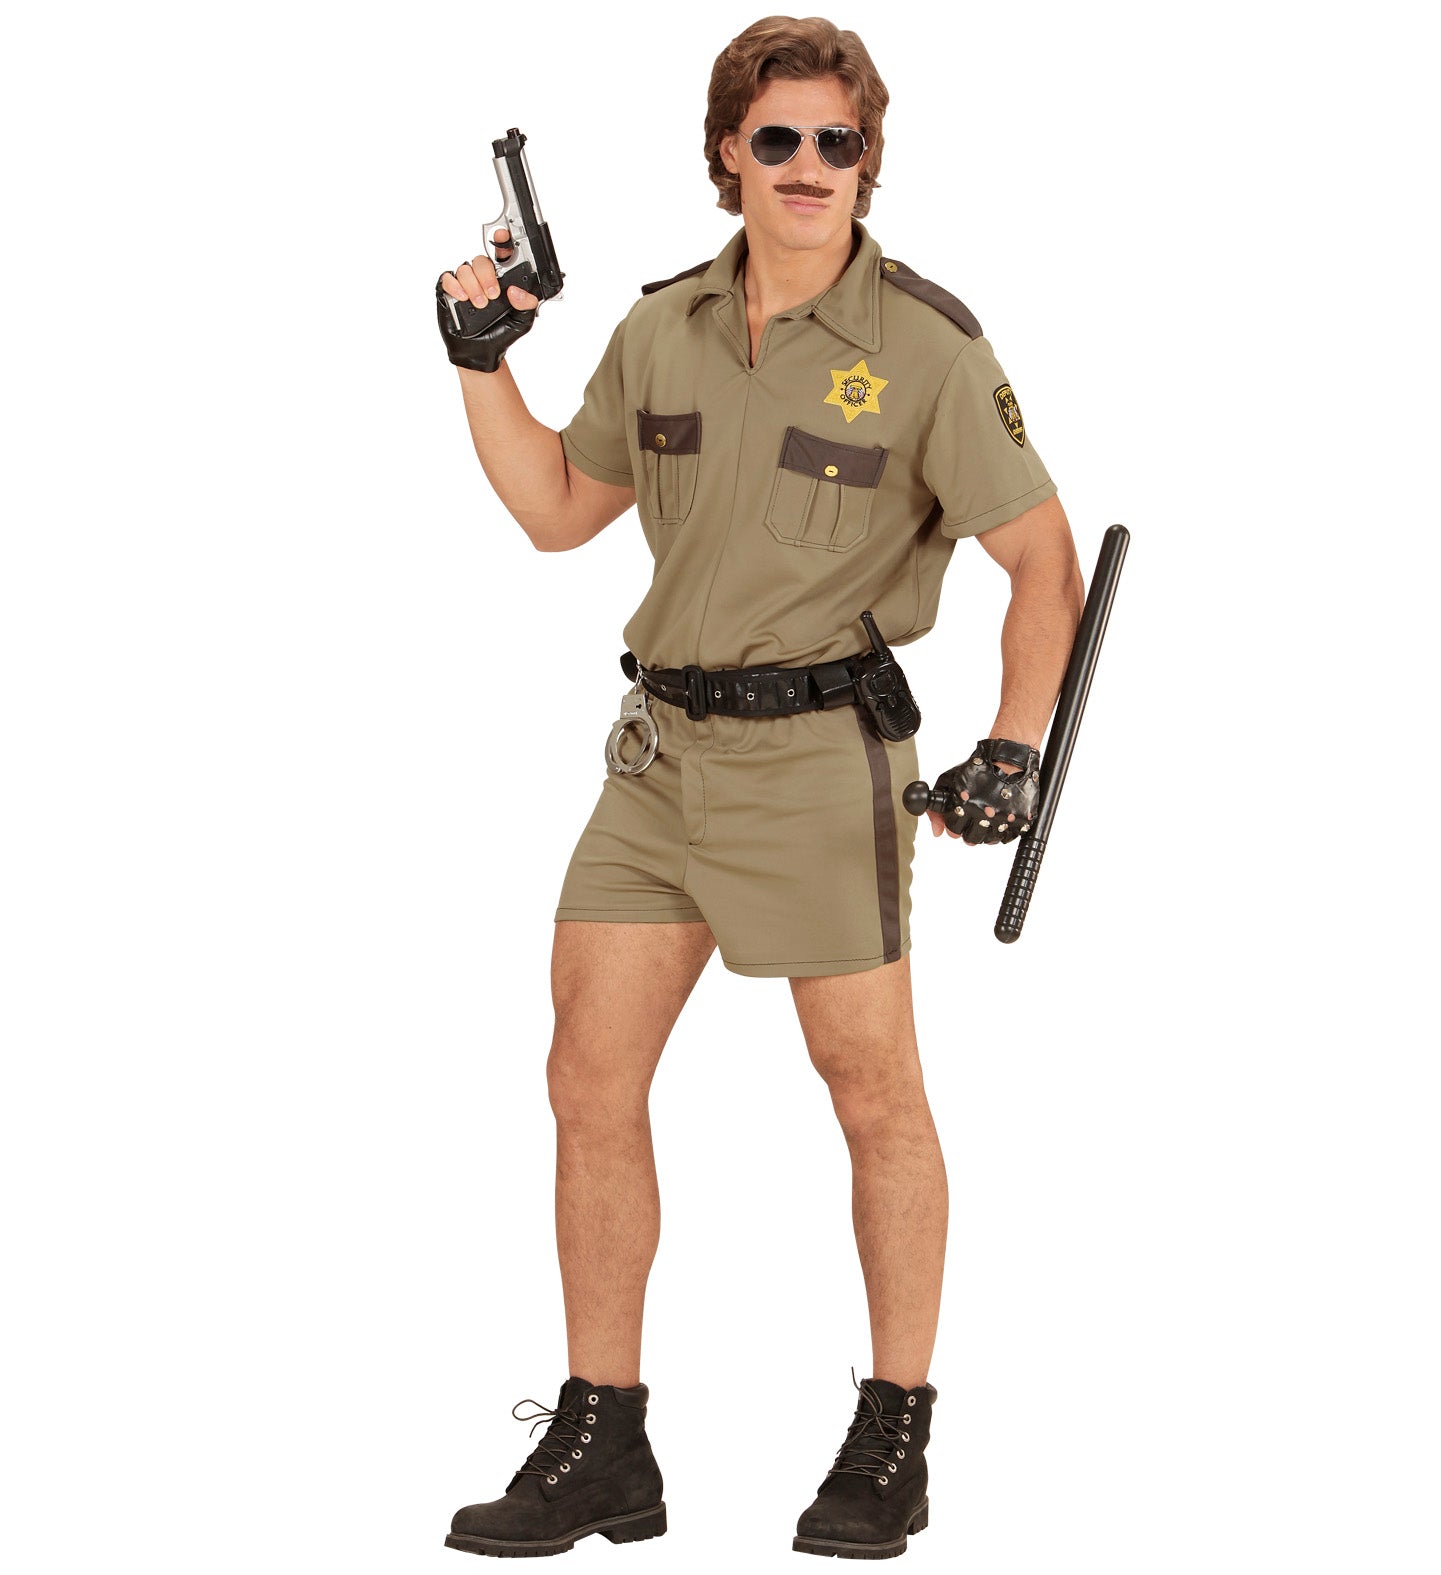 California Highway Patrol Officer CHiP's Costume